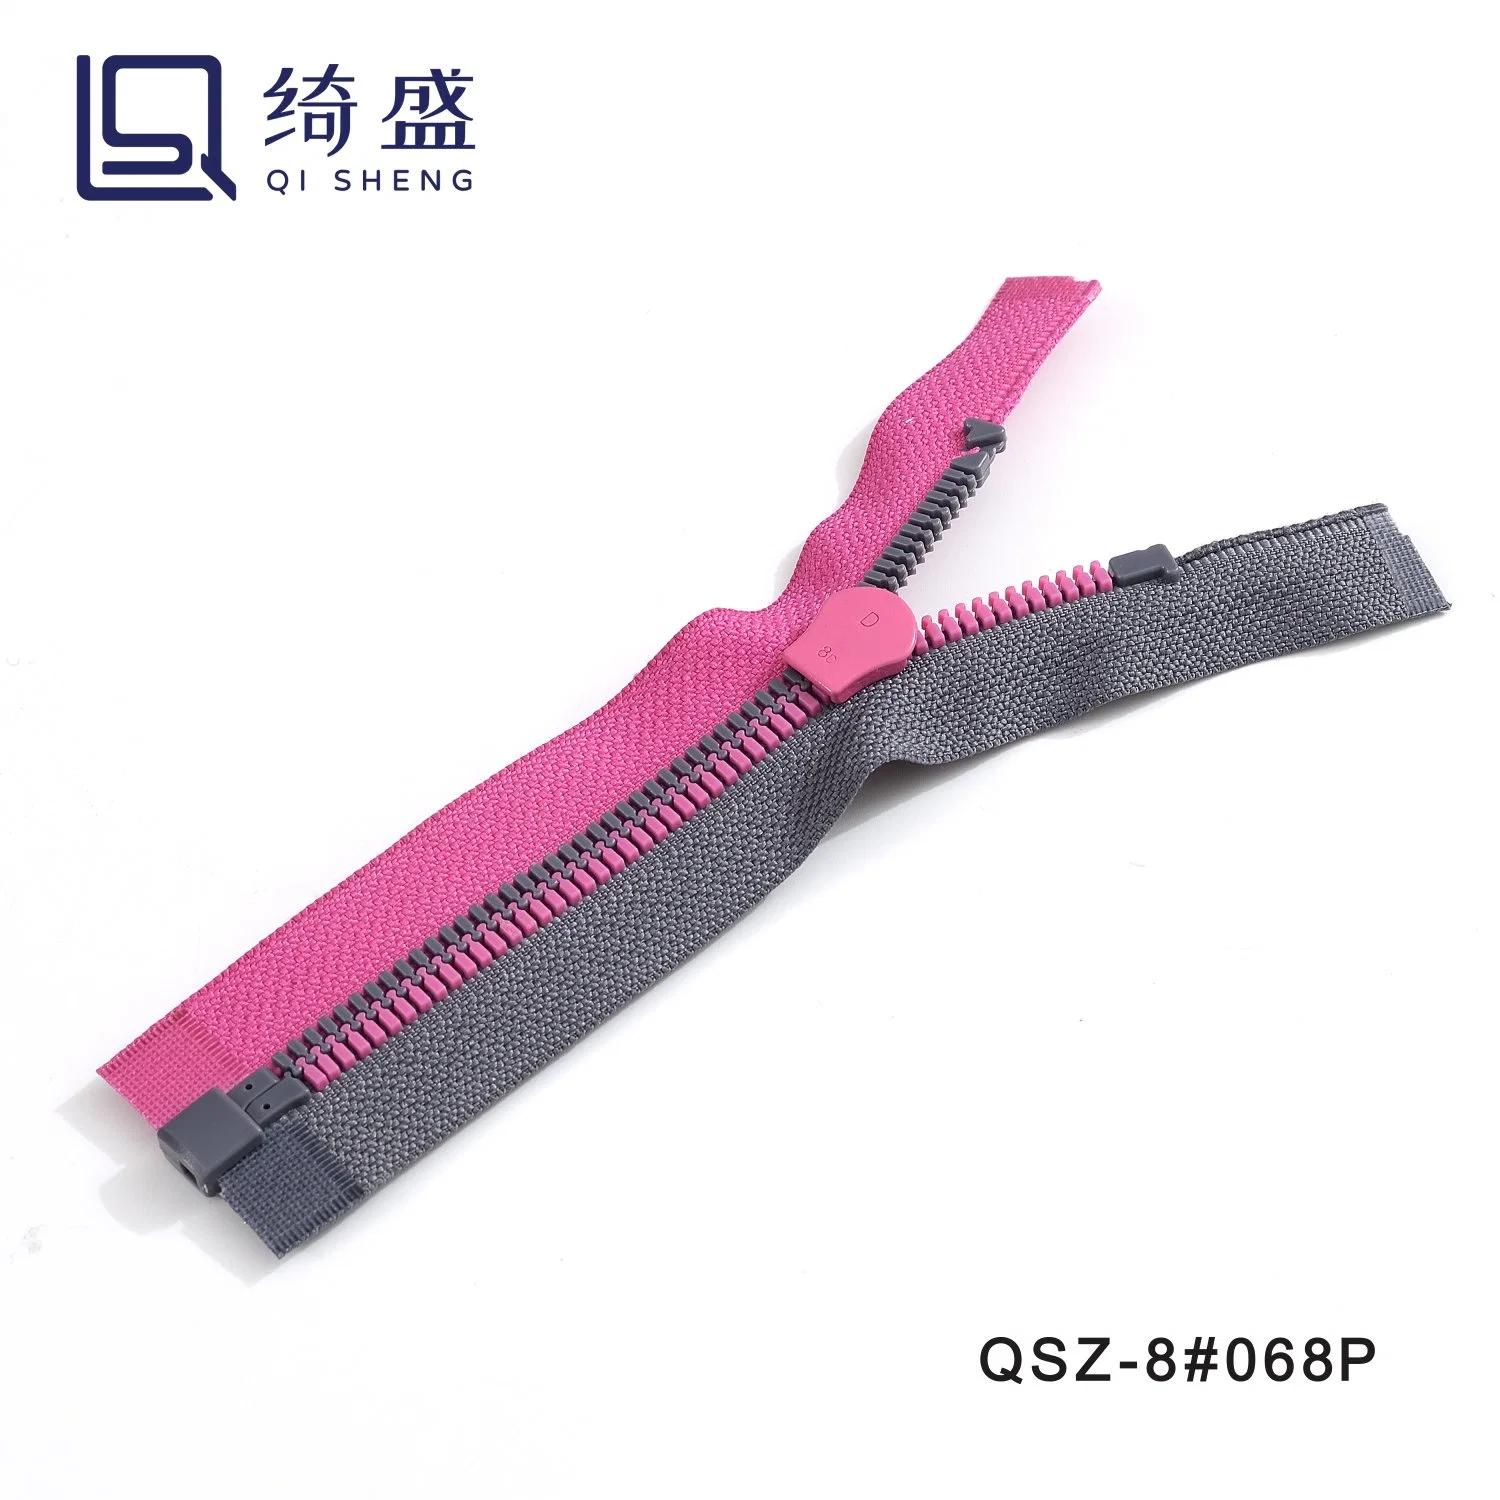 High quality/High cost performance  5# Plastic Zipper with High quality/High cost performance  Pull Tab/Plastic Zipper/ Resin Zipper/Two Colors of Fabric Zipper